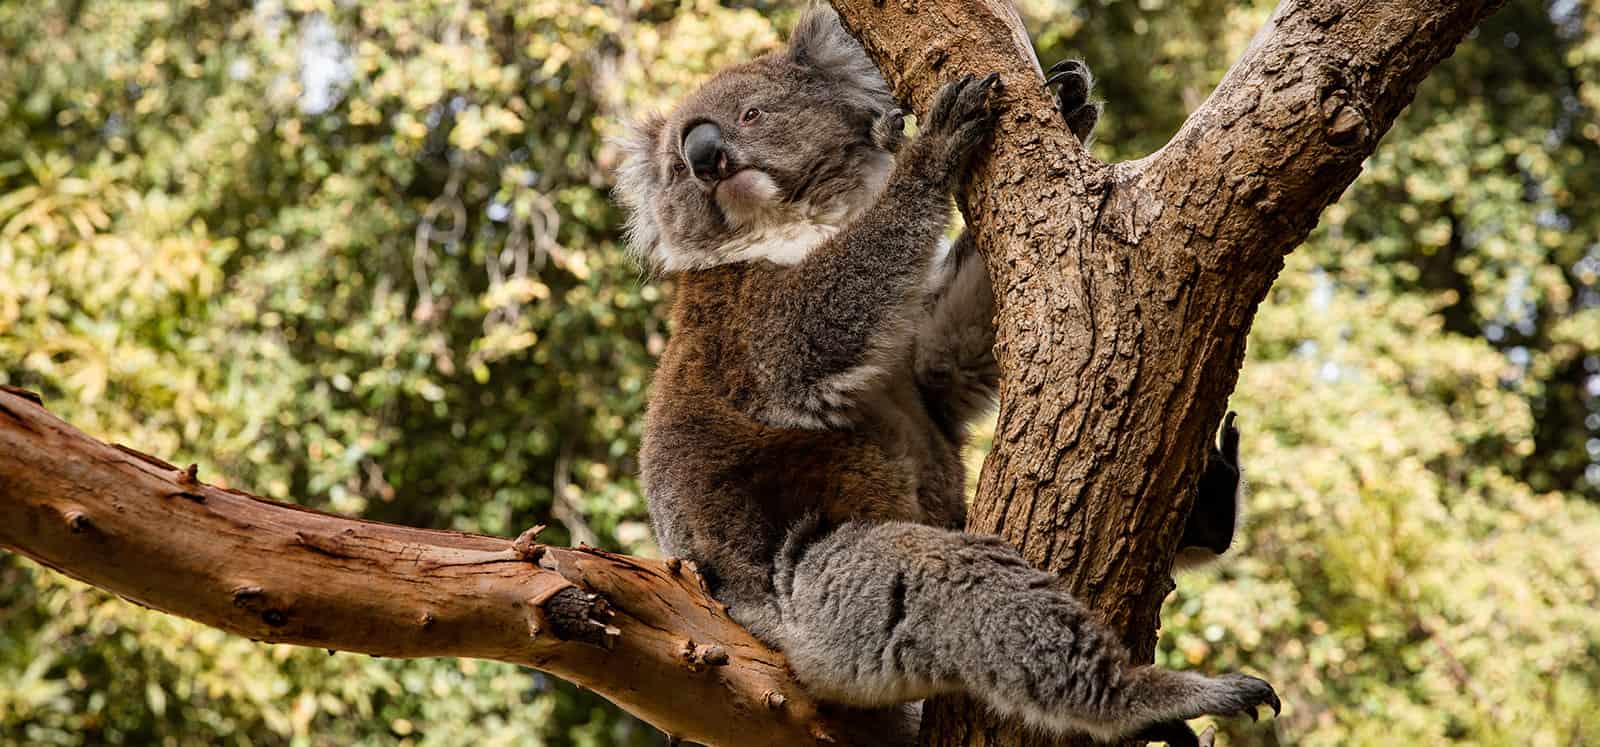 Koala sitting in gum tree at Adelaide Zoo